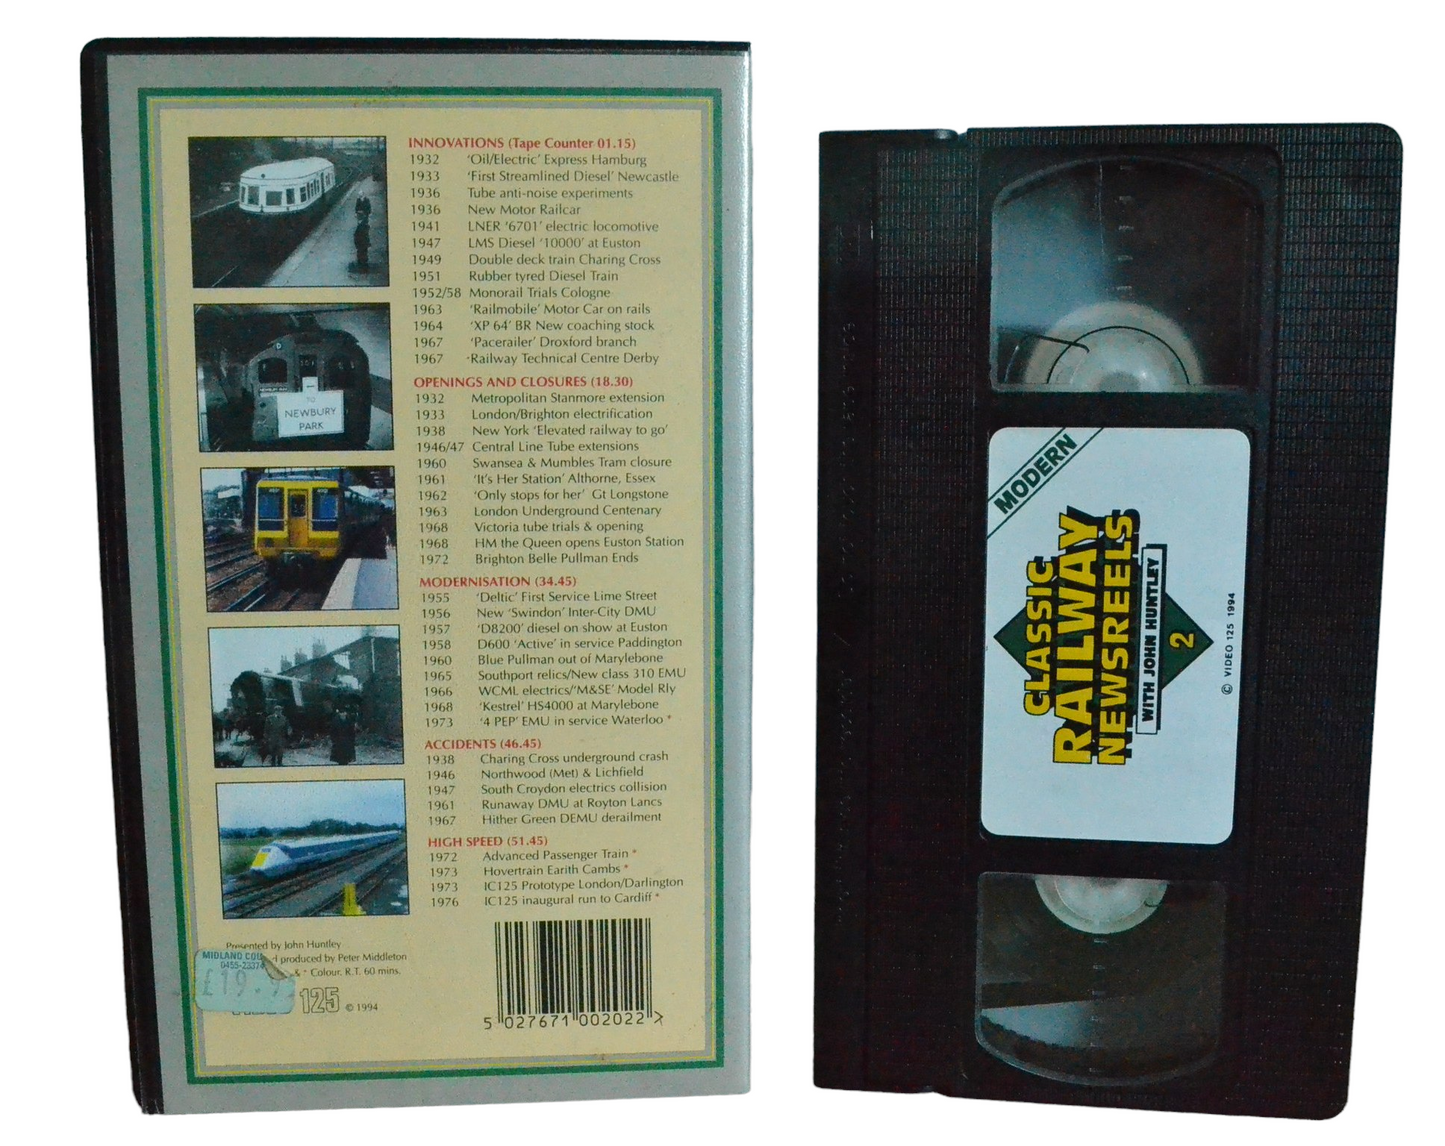 Classic Railway Newsreels With John Huntley 2 - Video 125 - VHS N202 - Steam Trains - Pal - VHS-